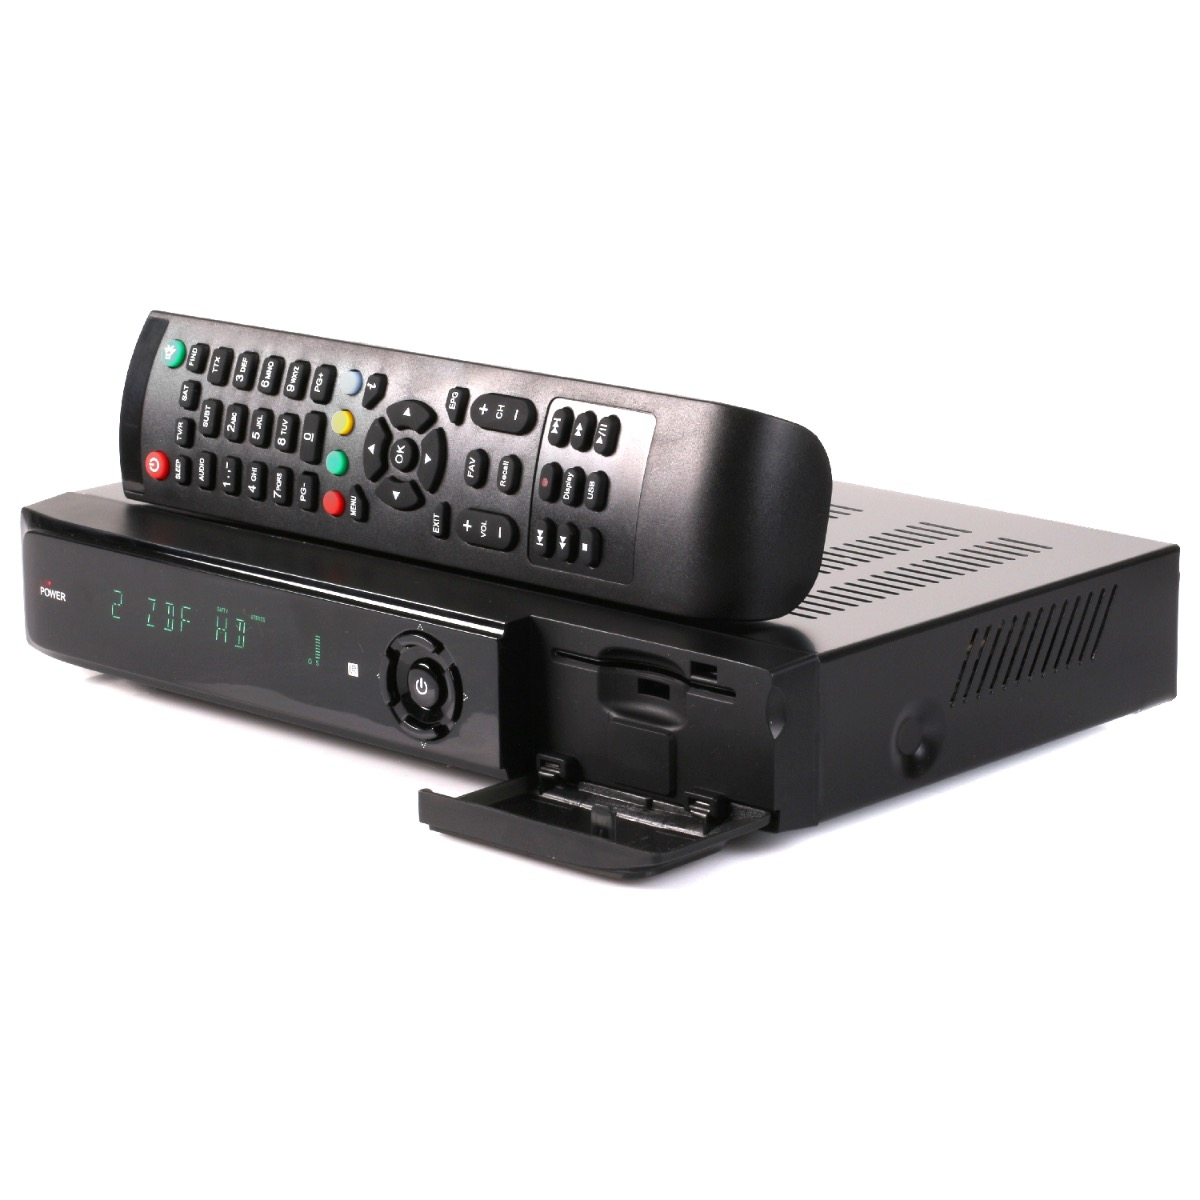 Receiver, (HDTV, Receiver IPTV H.265, mit aVA DVB-S2, DVB-S2 UHD, schwarz) 2160p, DVB-S2X, DVB-S, ANK Digitaler PVR, ANKARO Satelliten HD PVR-Funktion, 4K,